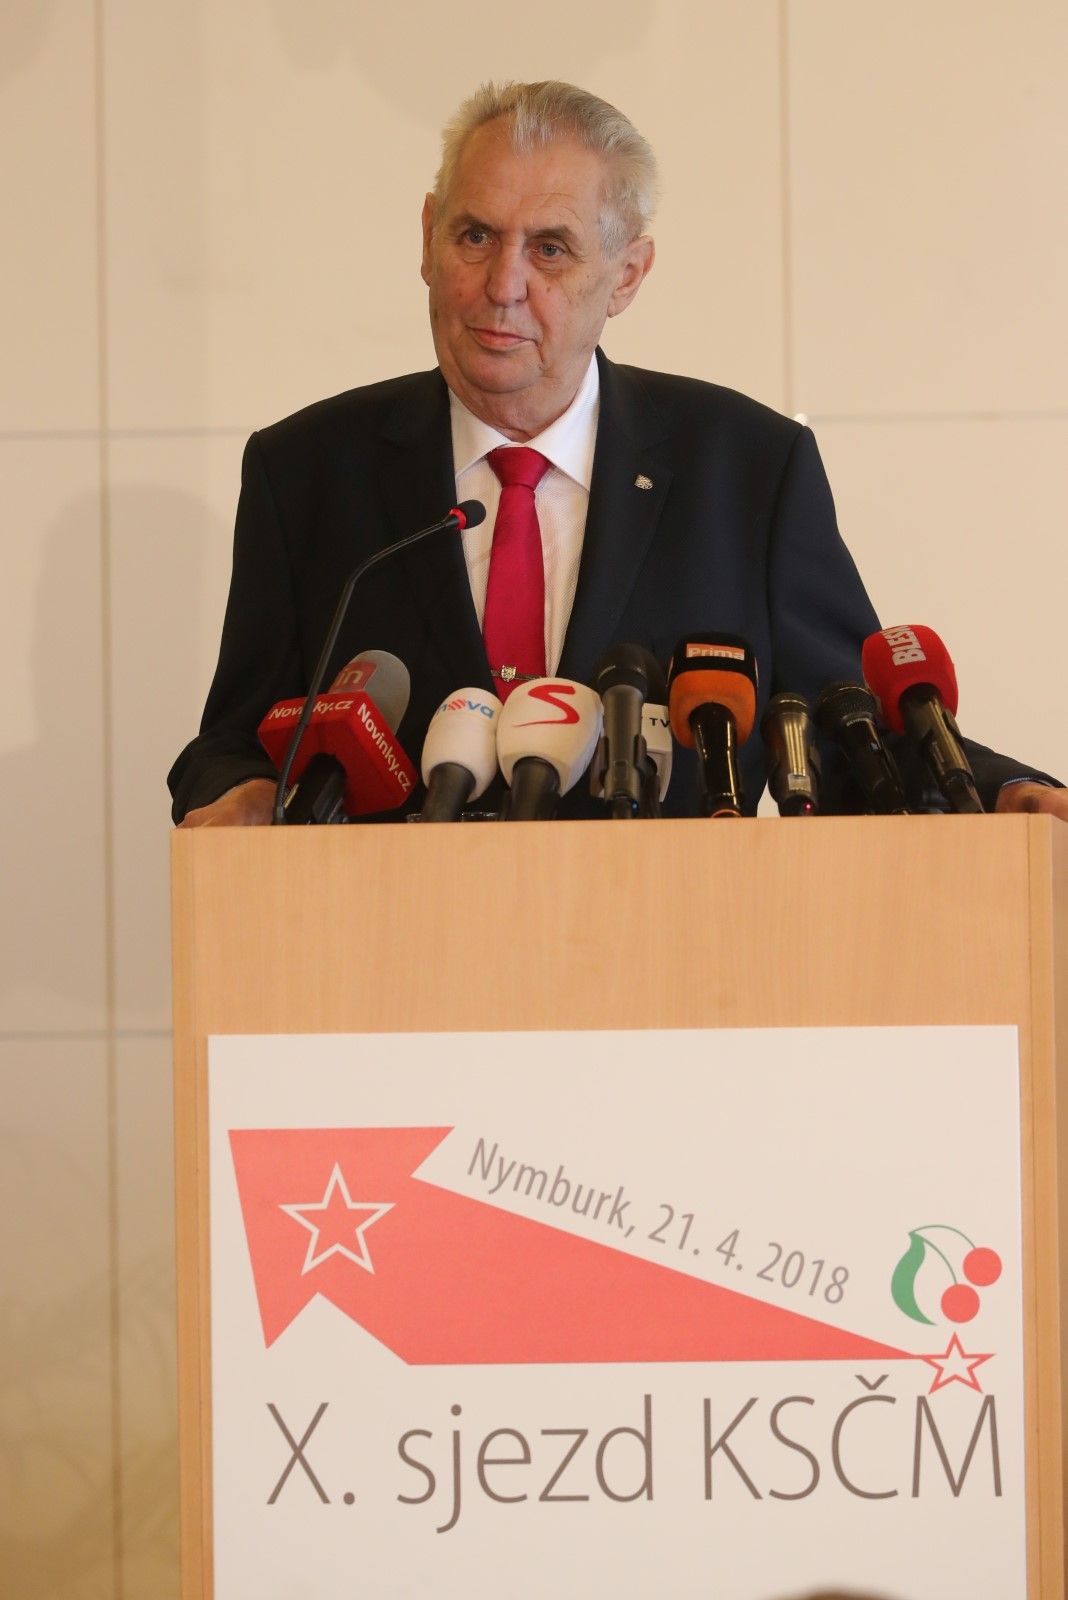 Miloš Zeman na sjezdu KSČM v Nymburku (21. 4. 2018)